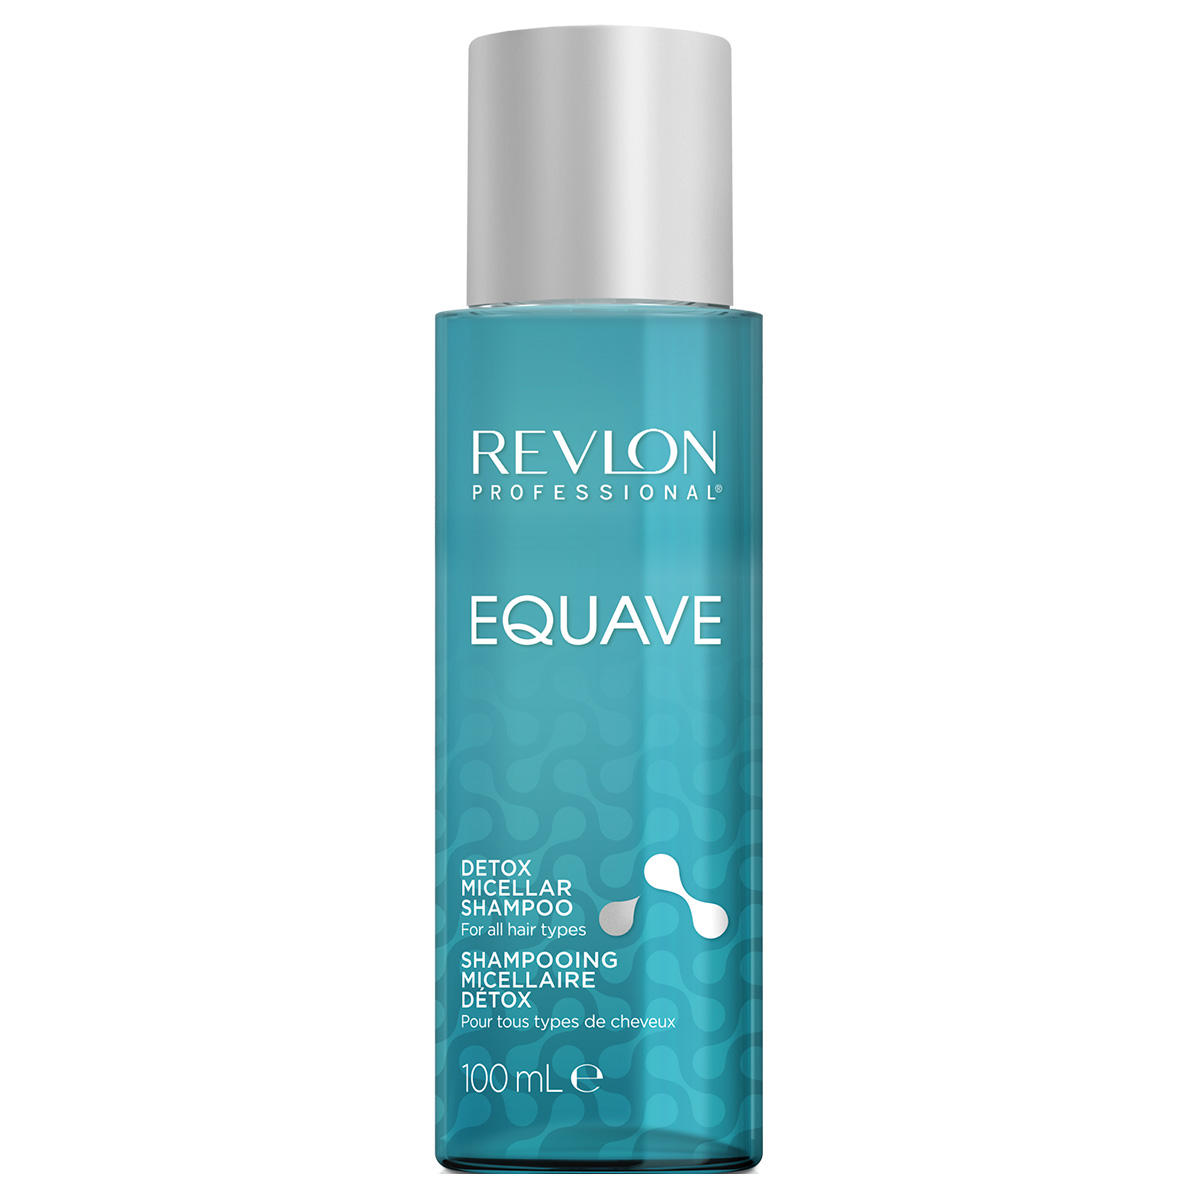 Revlon Professional Equave Detox Micellar Shampoo  - 1